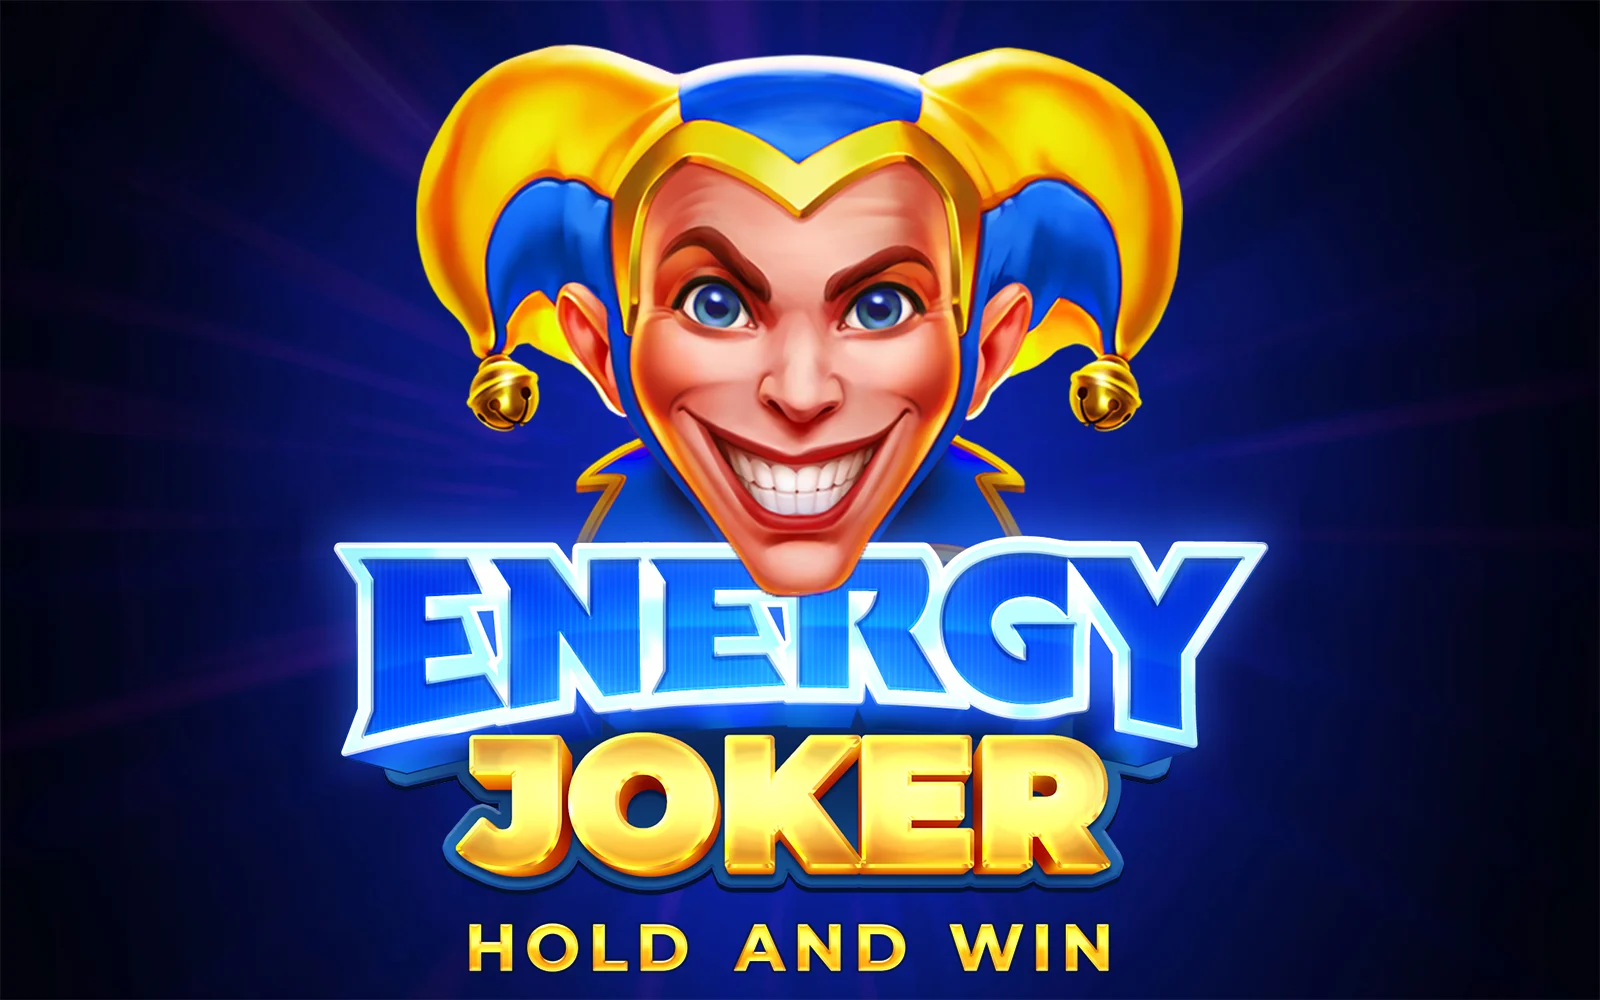 Gioca a Energy Joker: Hold and Win sul casino online Starcasino.be